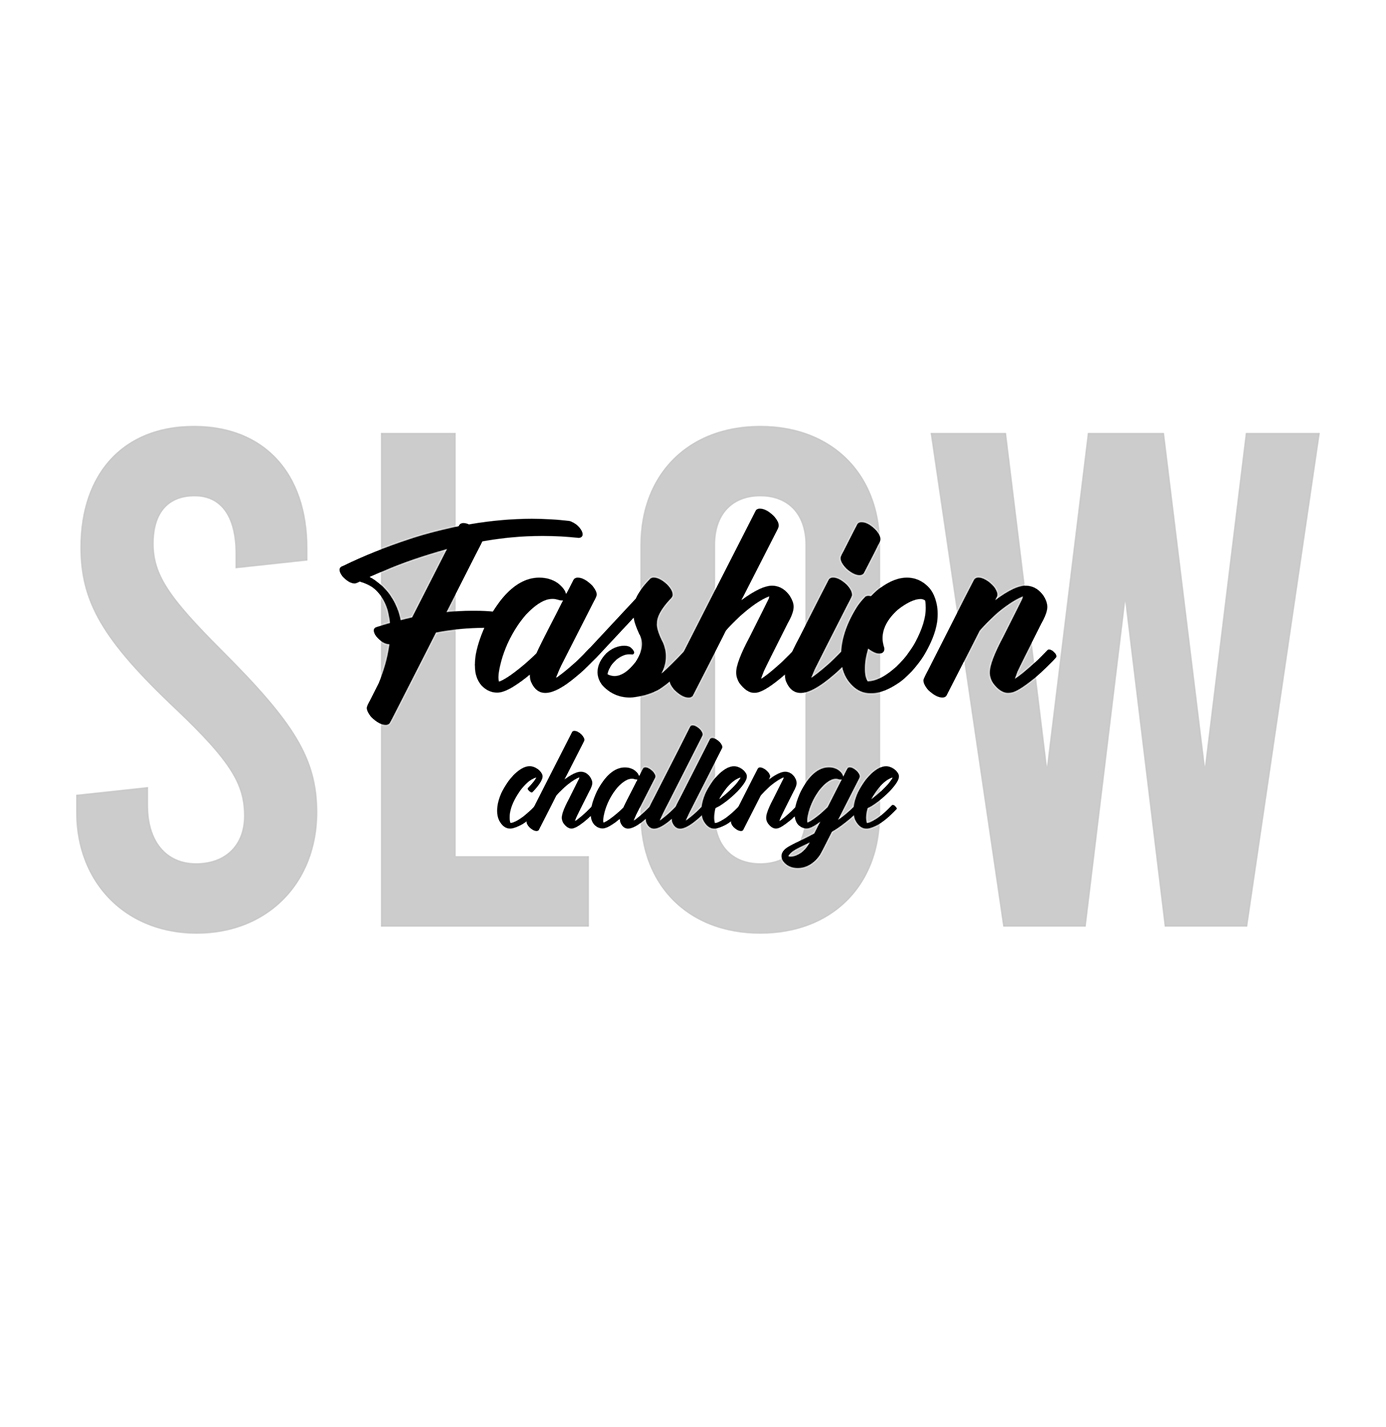 Slow Fashion Challenge 2019 logo